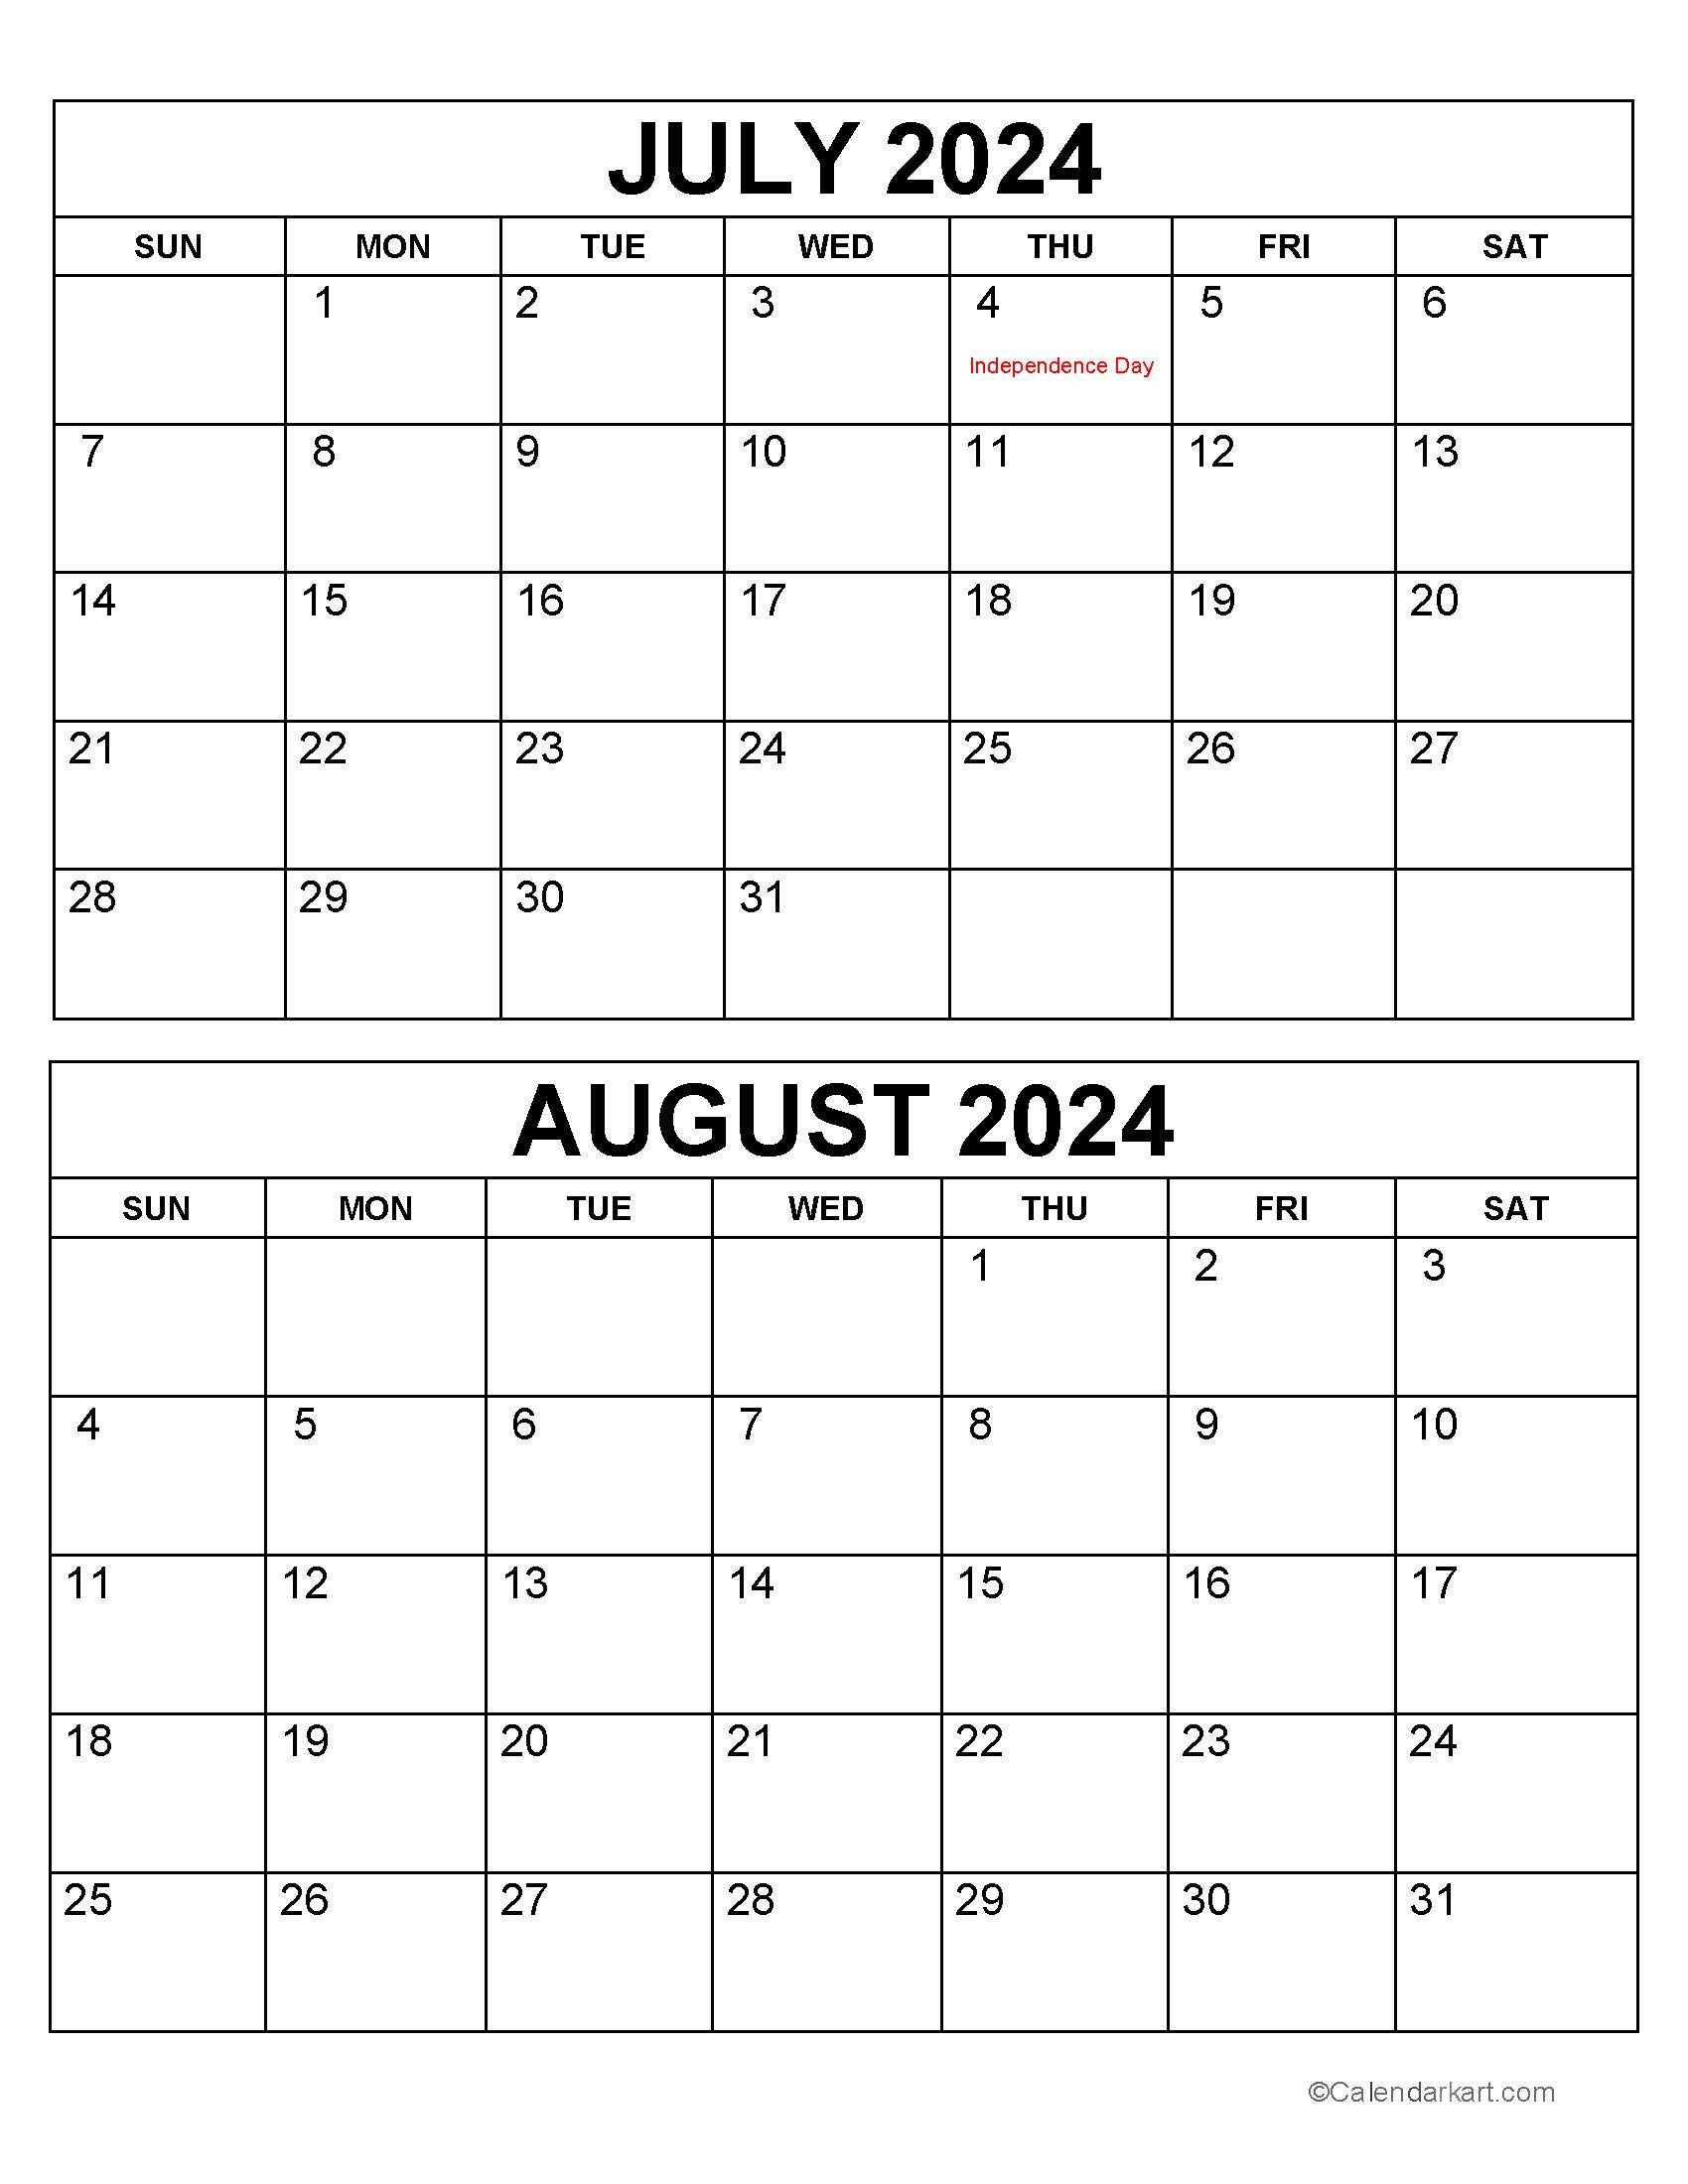 Printable July August 2024 Calendar | Calendarkart intended for Printable July and August 2024 Calendar